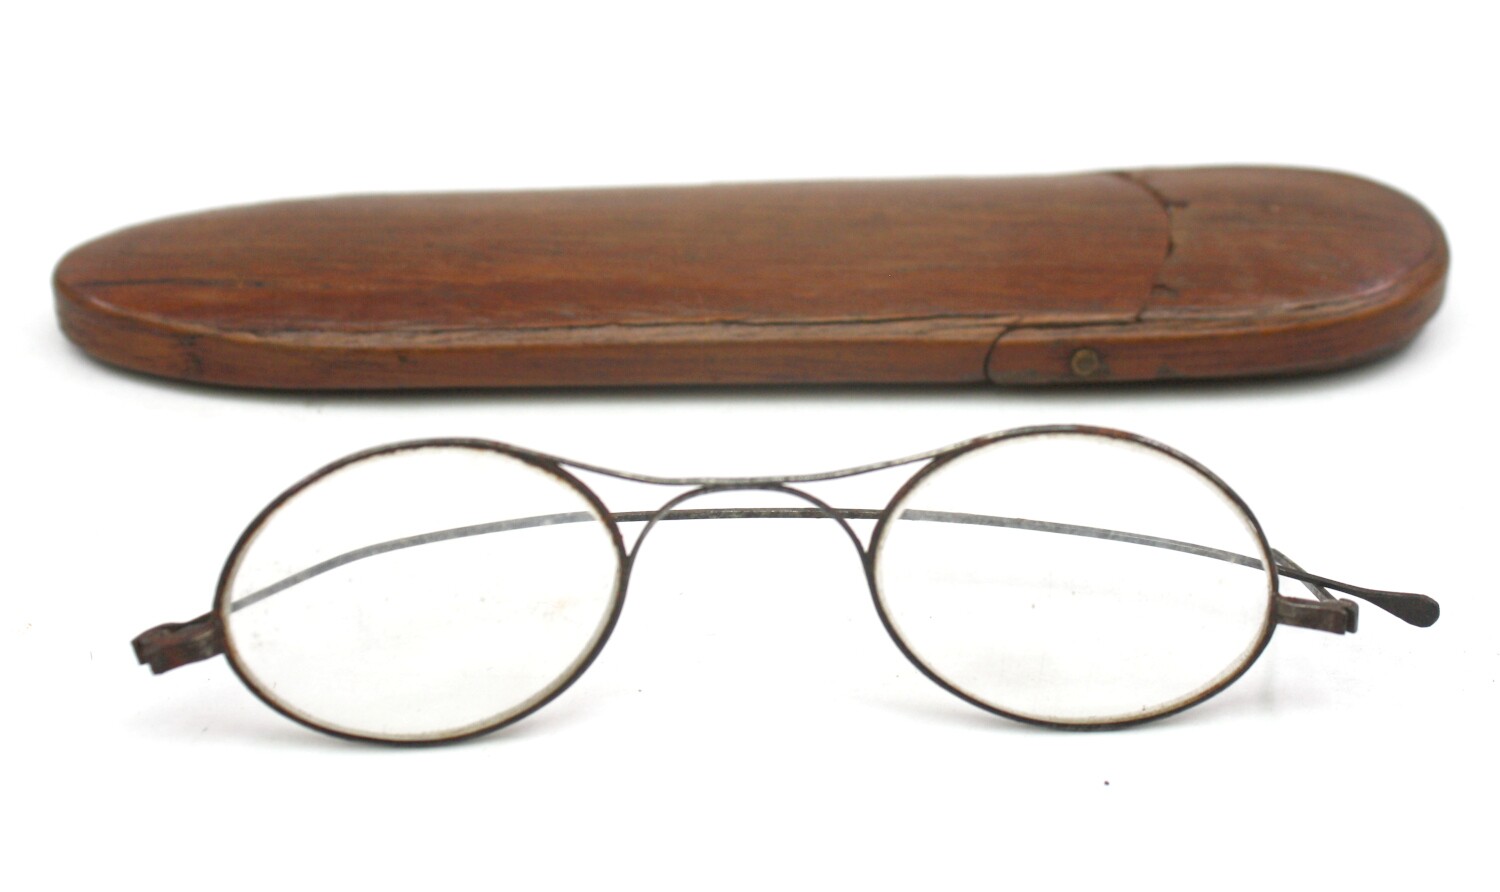 Brille mit Futteral (Drilandmuseum CC BY-NC-SA)